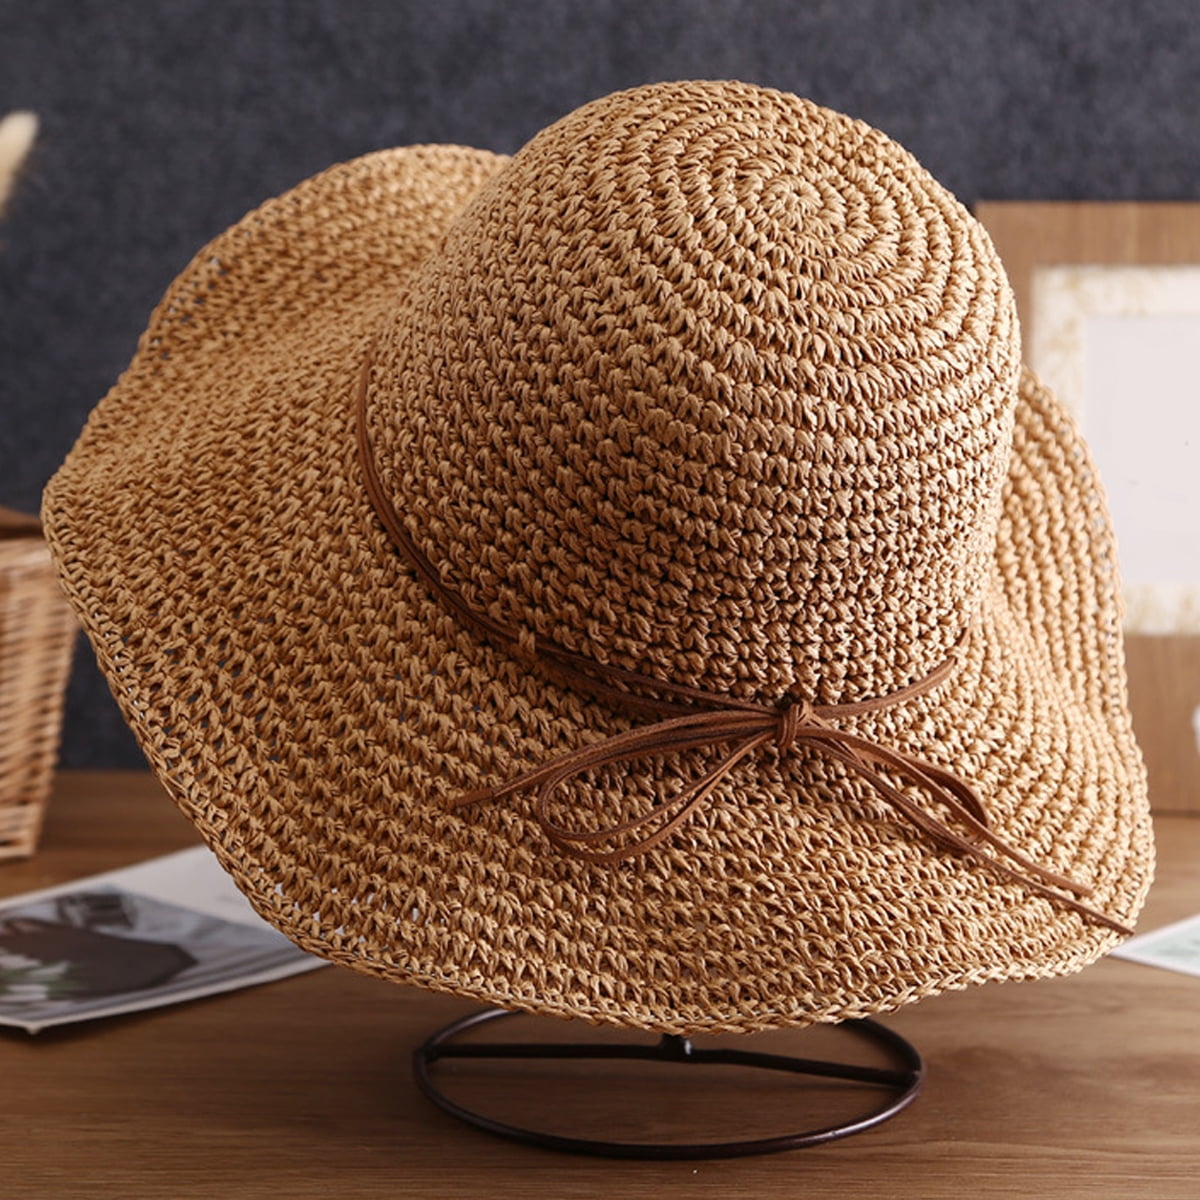 Eqwljwe Womens Fashion Large Hat Wide Brim Sun Hat Beach Anti-UV Sun Protection Foldable Stage Cap Cover Body Straw Hat Foldable Straw Cap Cover